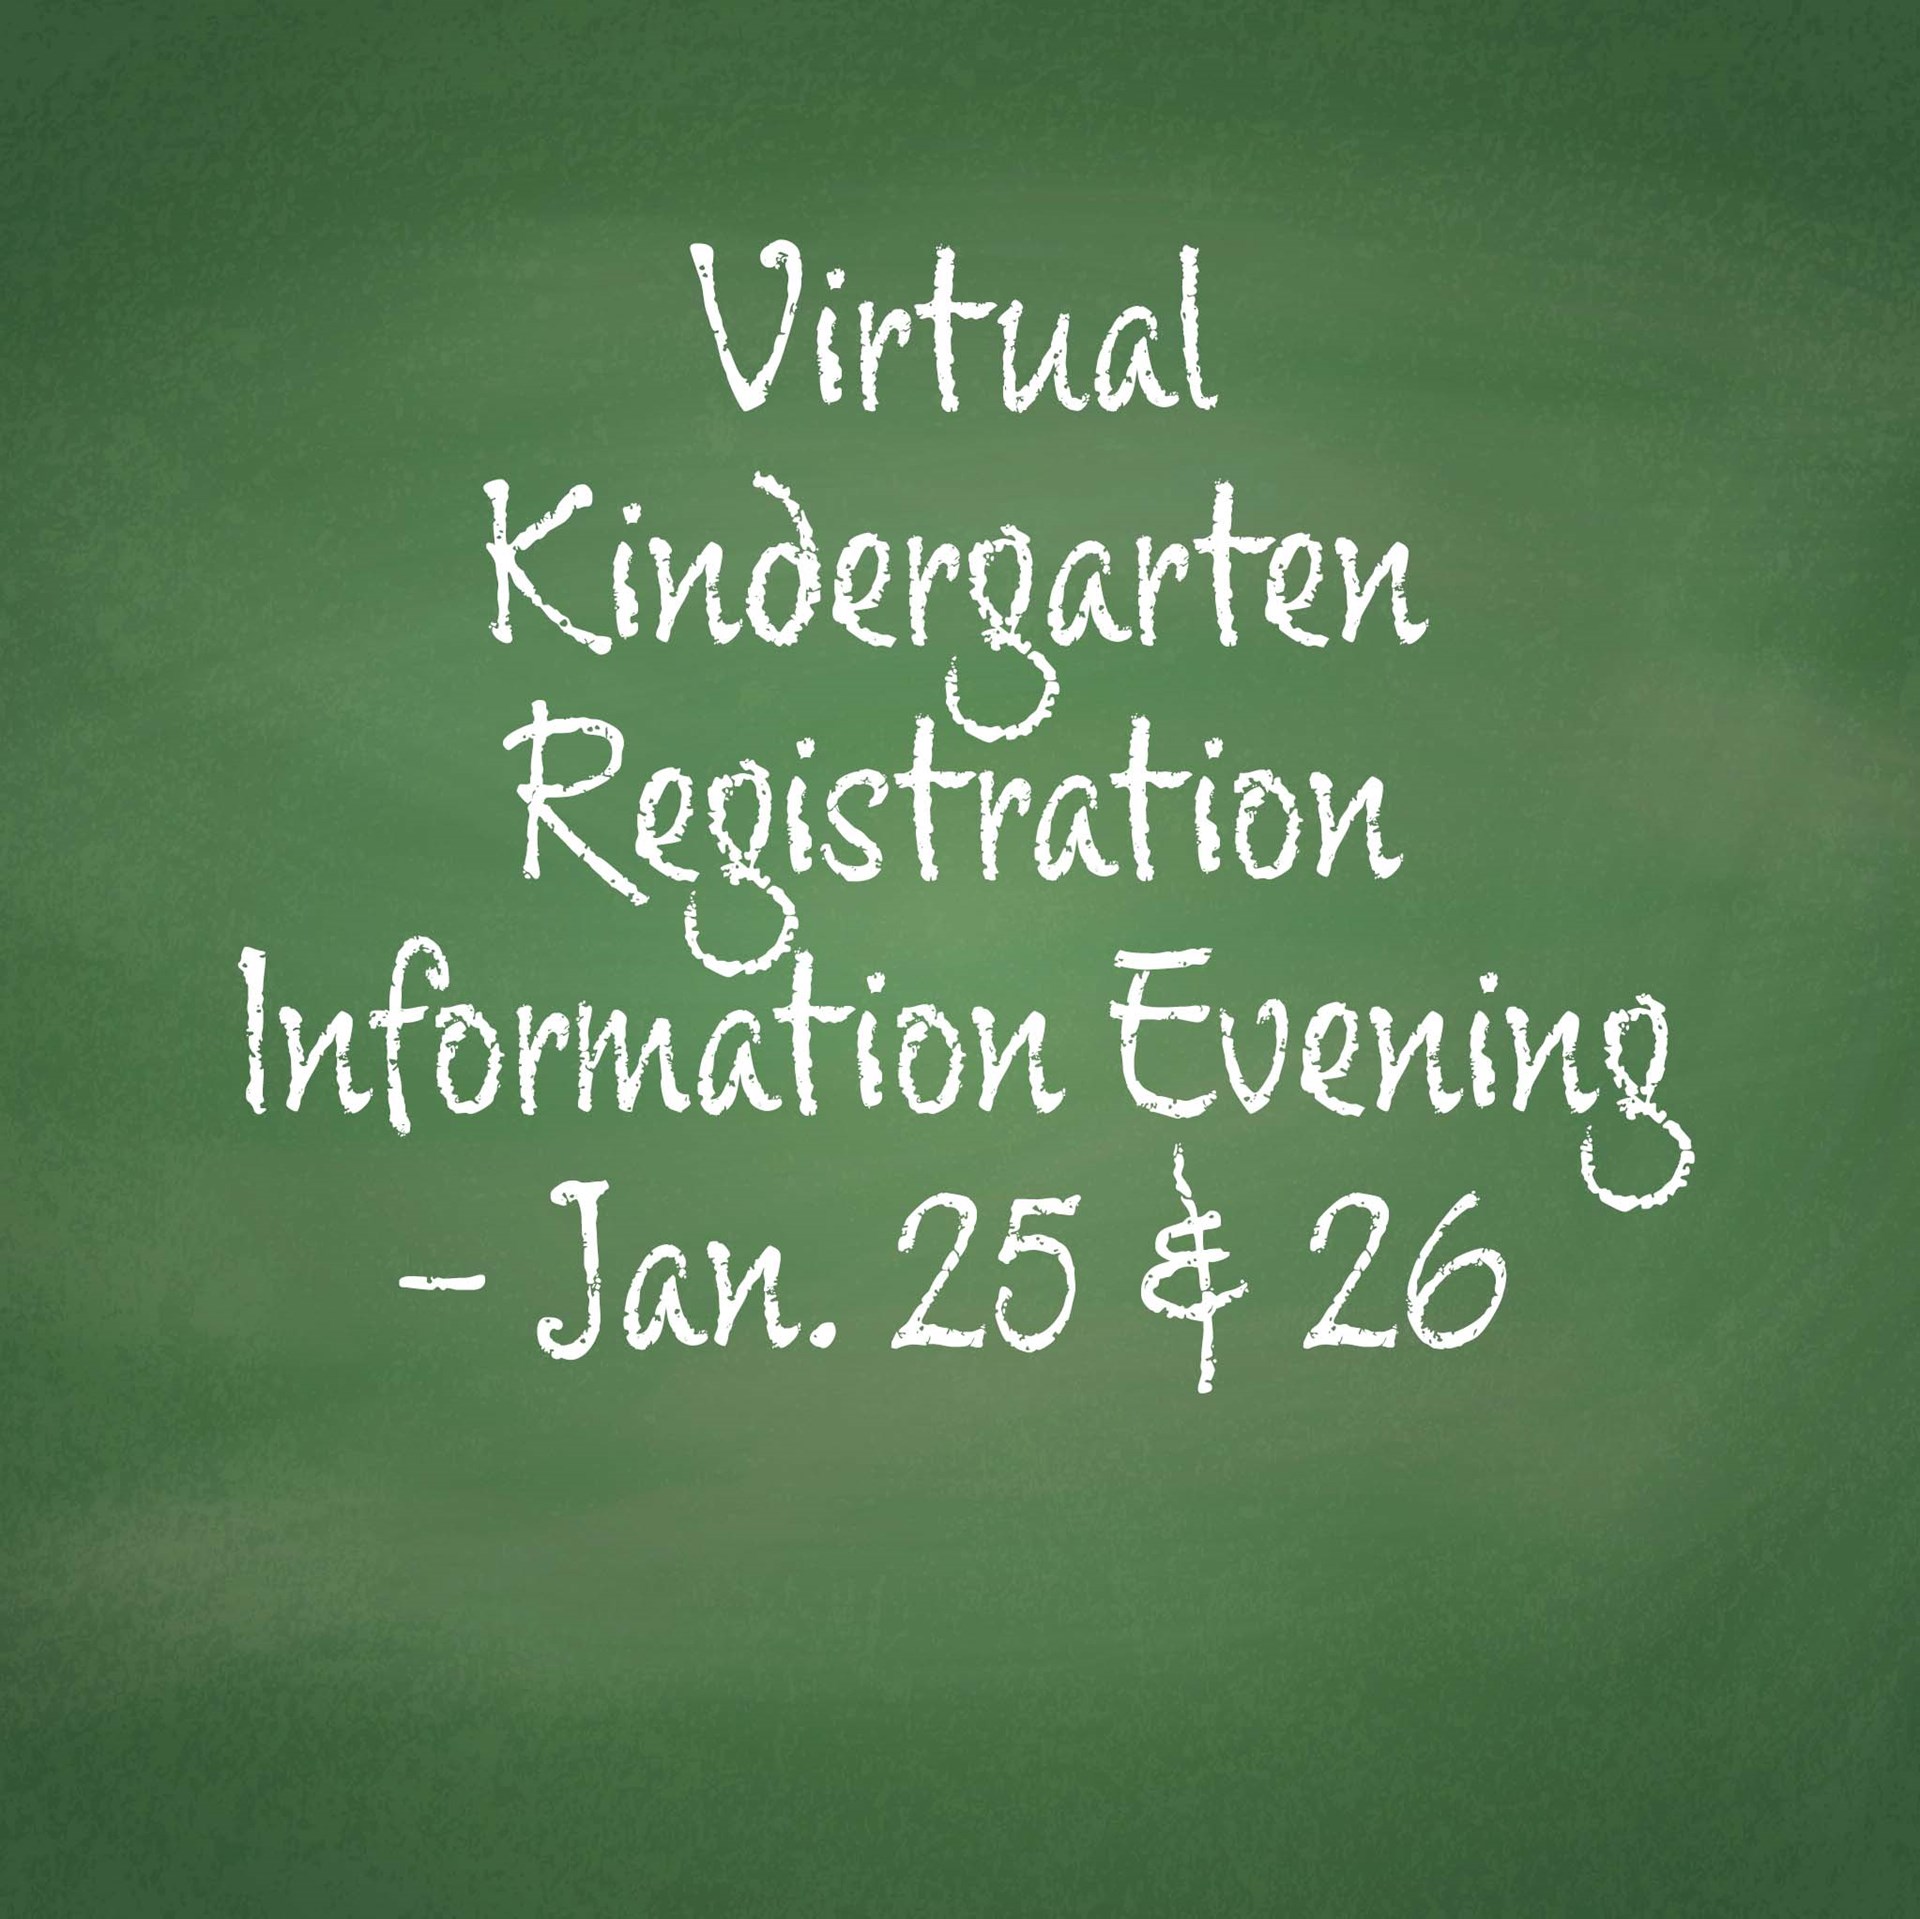 Virtual Kindergarten Registration Information Evening Jan 25 and 26.jpg